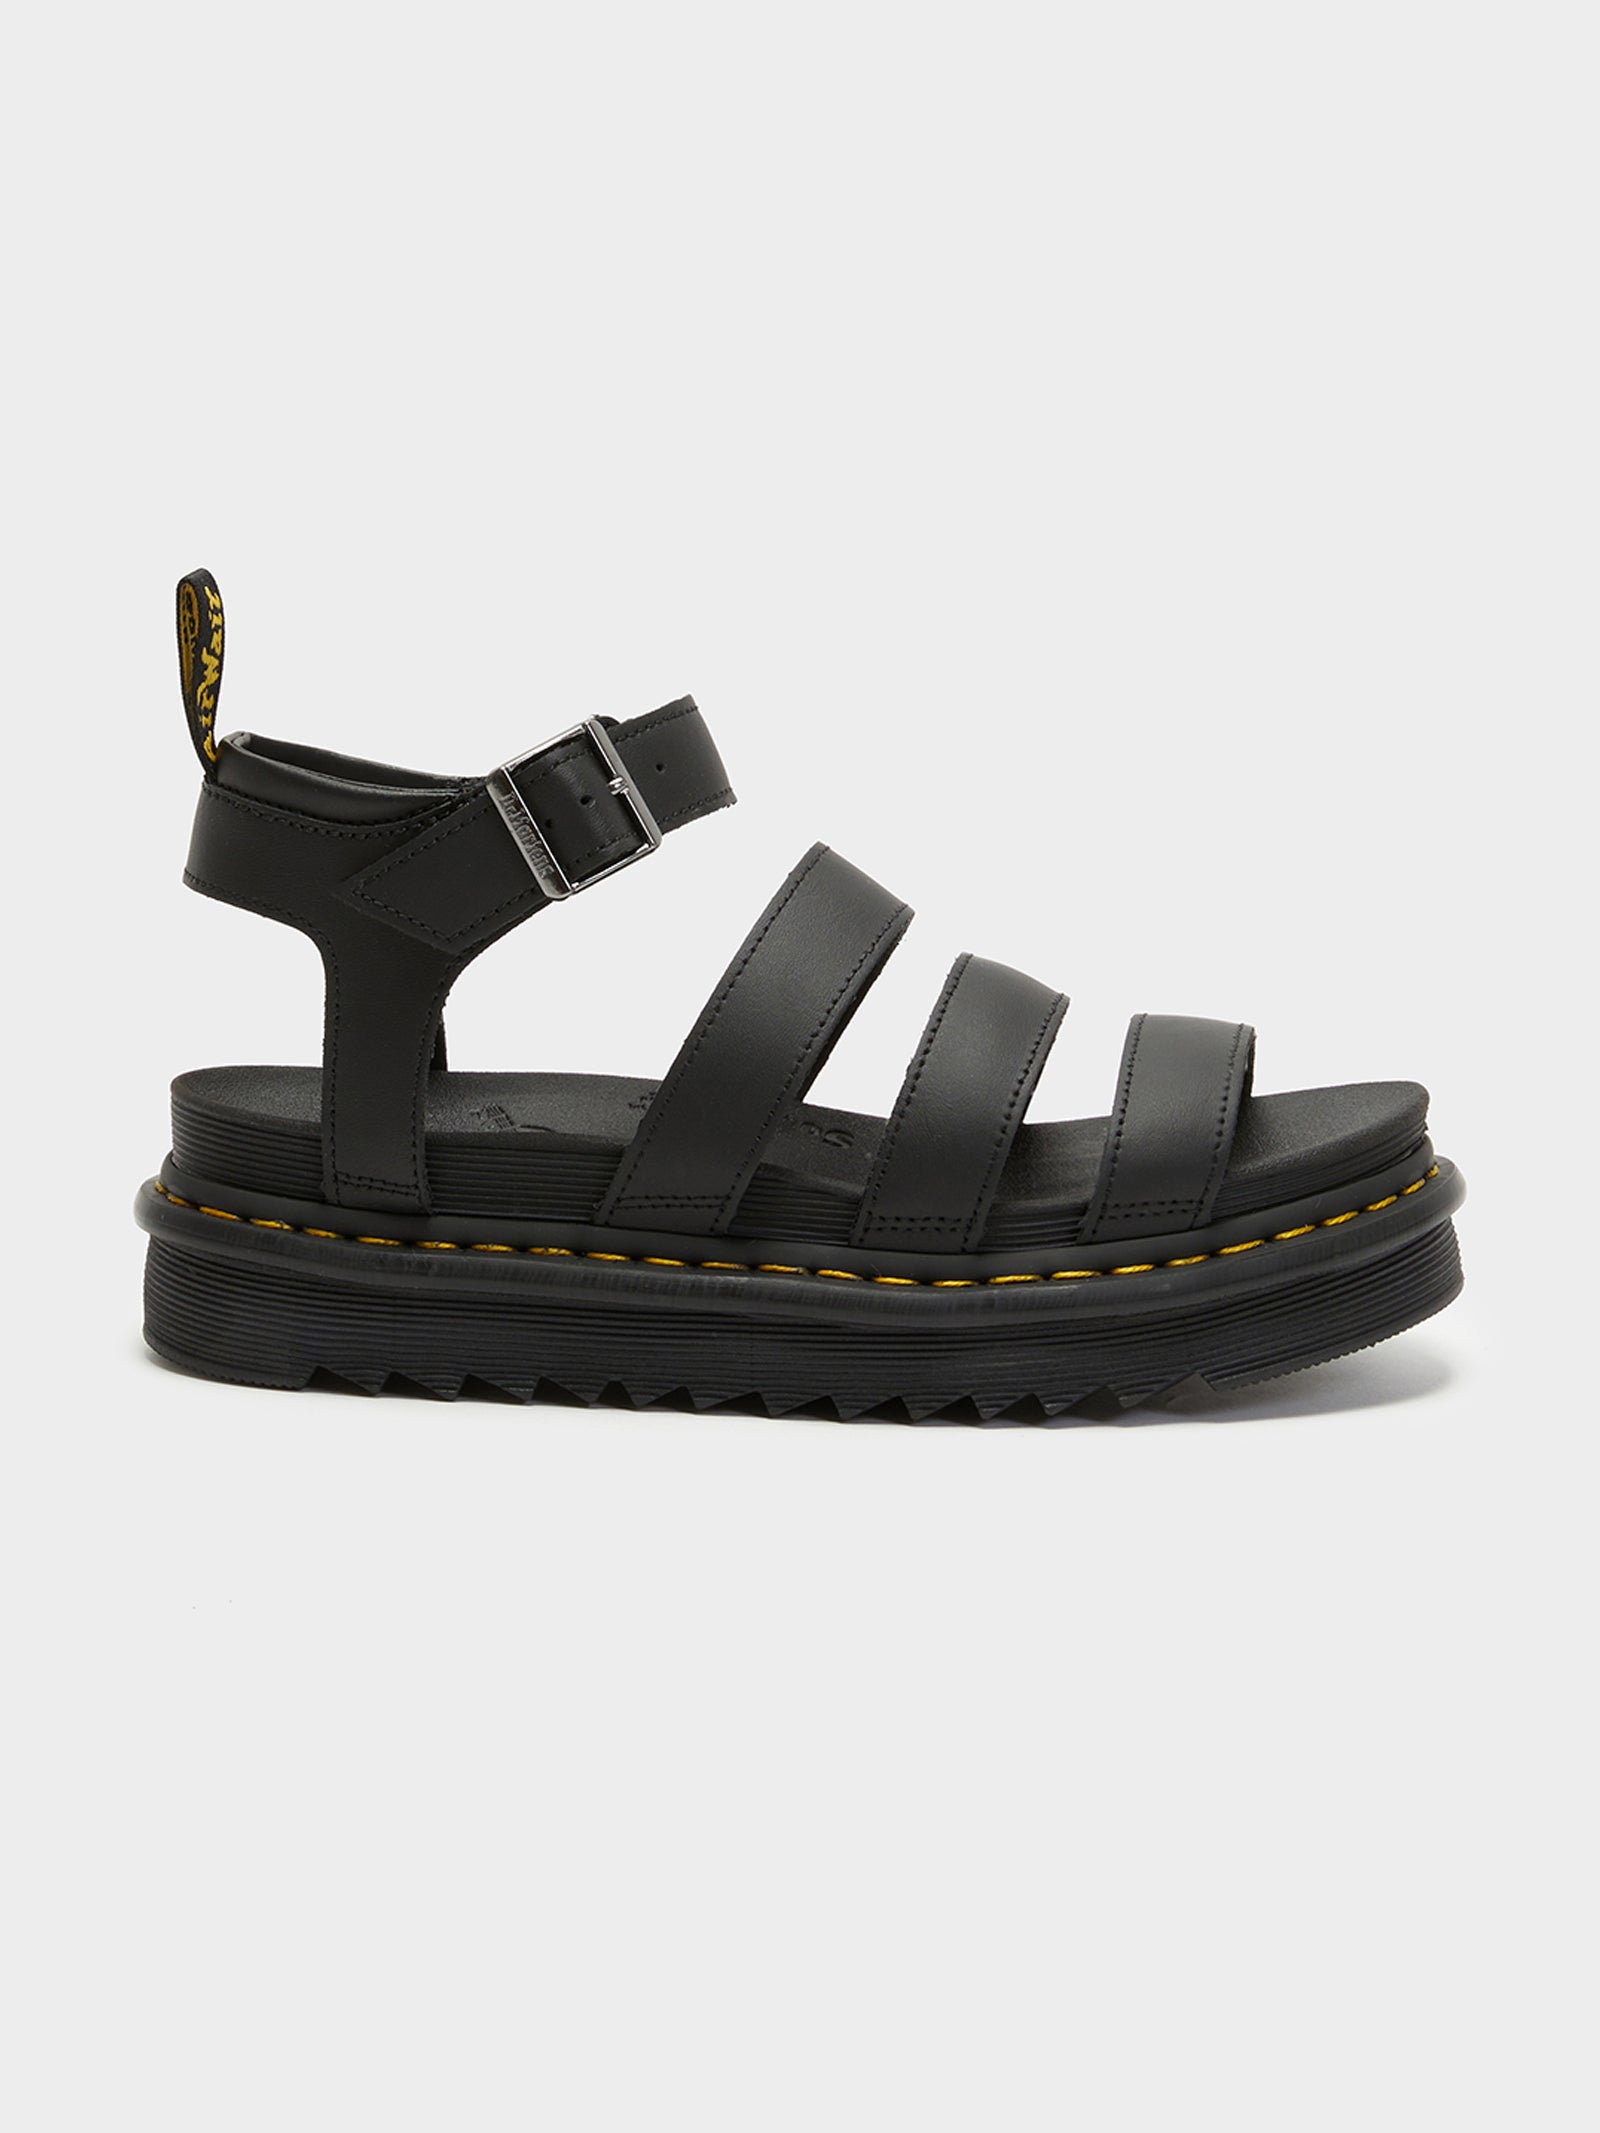 Blaire 3 Strap Sandals in Black - Glue Store